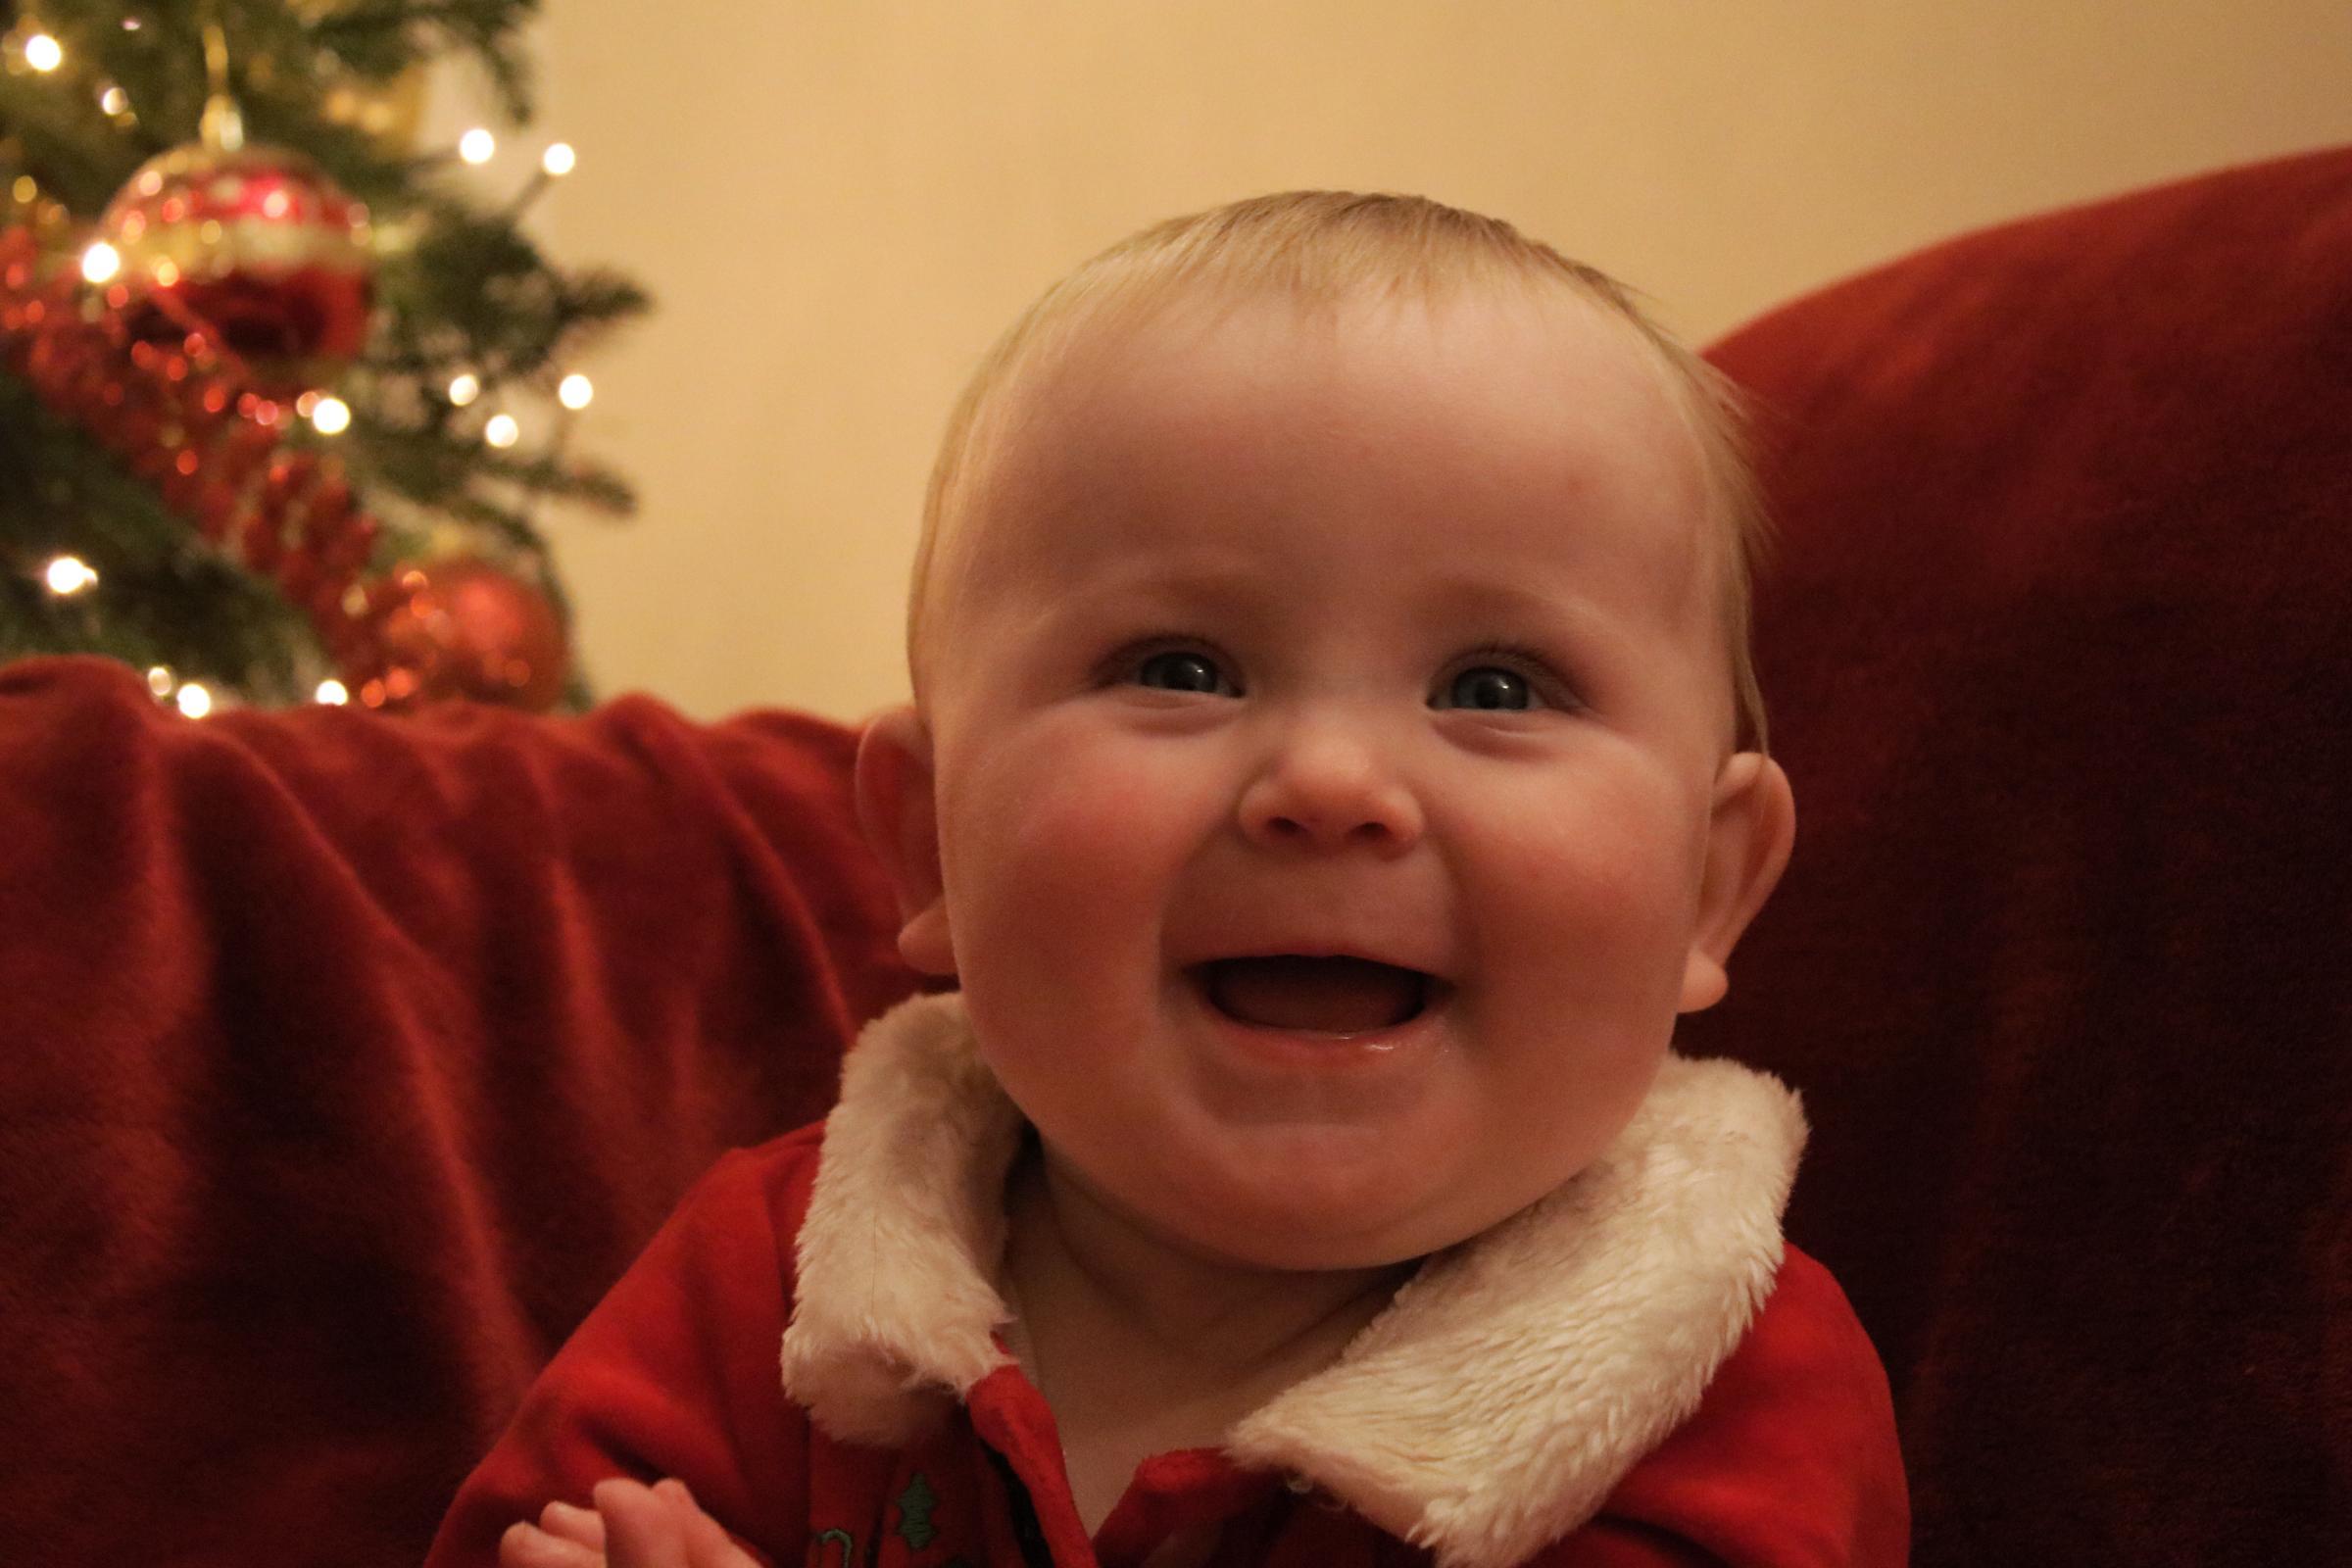 A happy Holly at Christmas